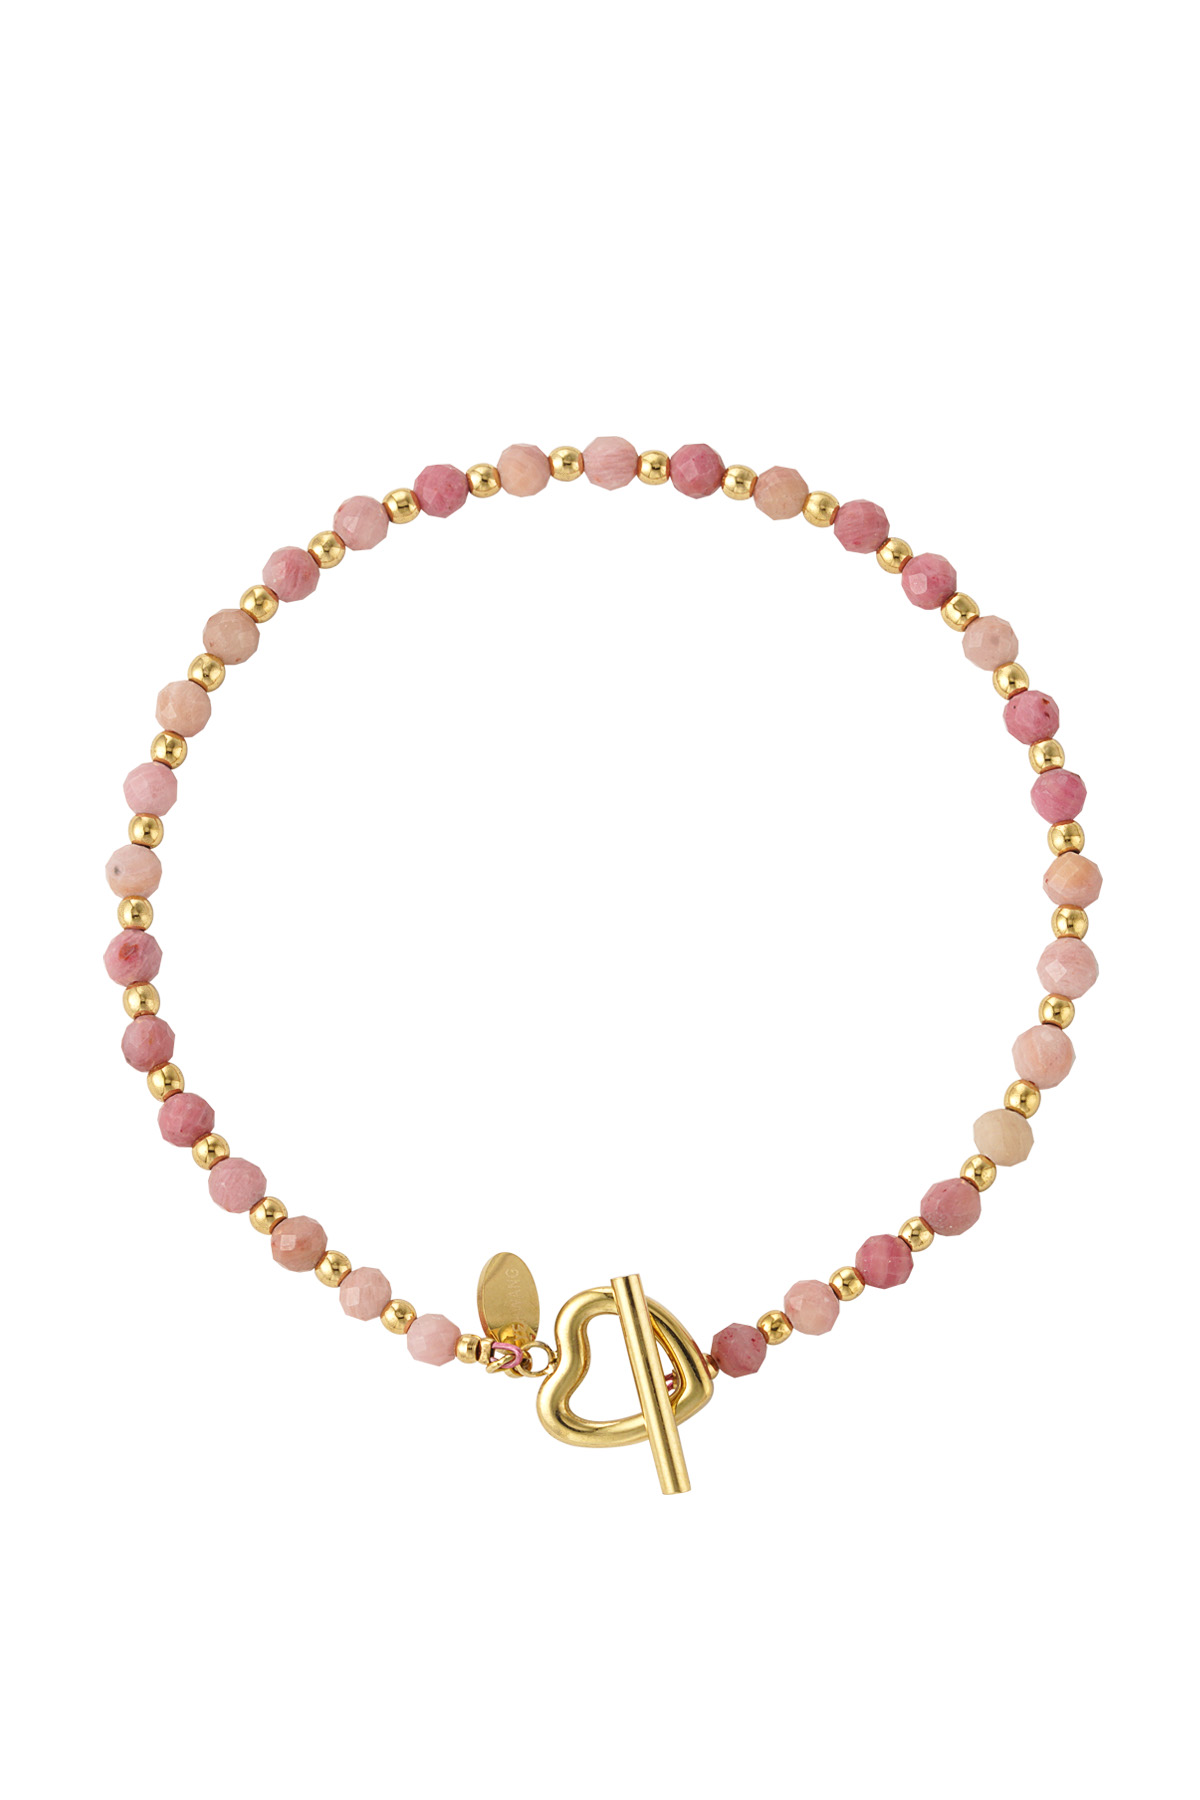 Beaded bracelet heart lock - pink/gold Stainless Steel